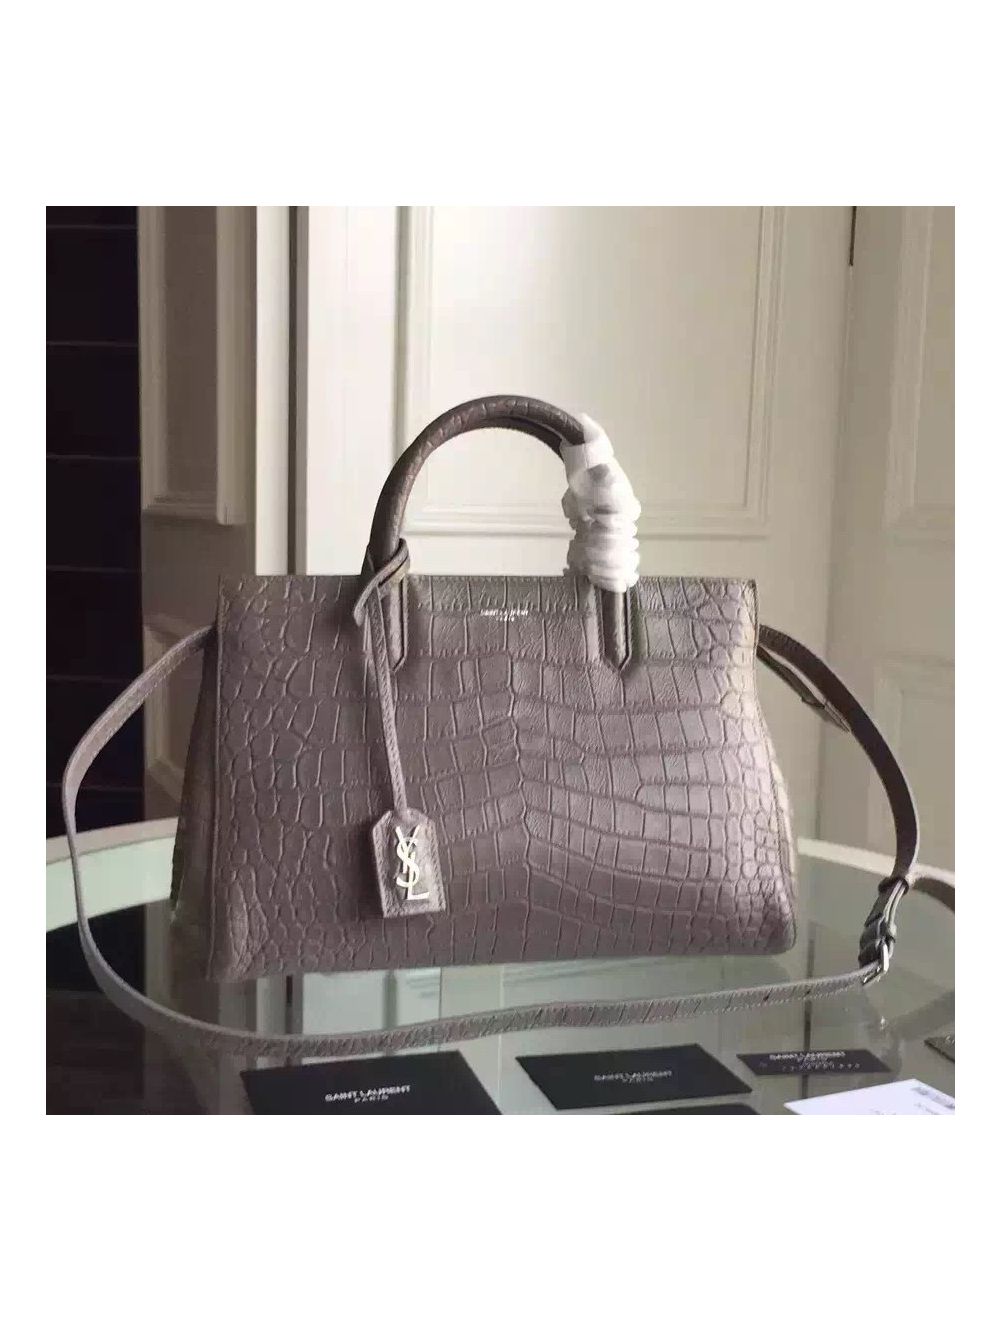 Yves Saint Laurent Replica Handbags